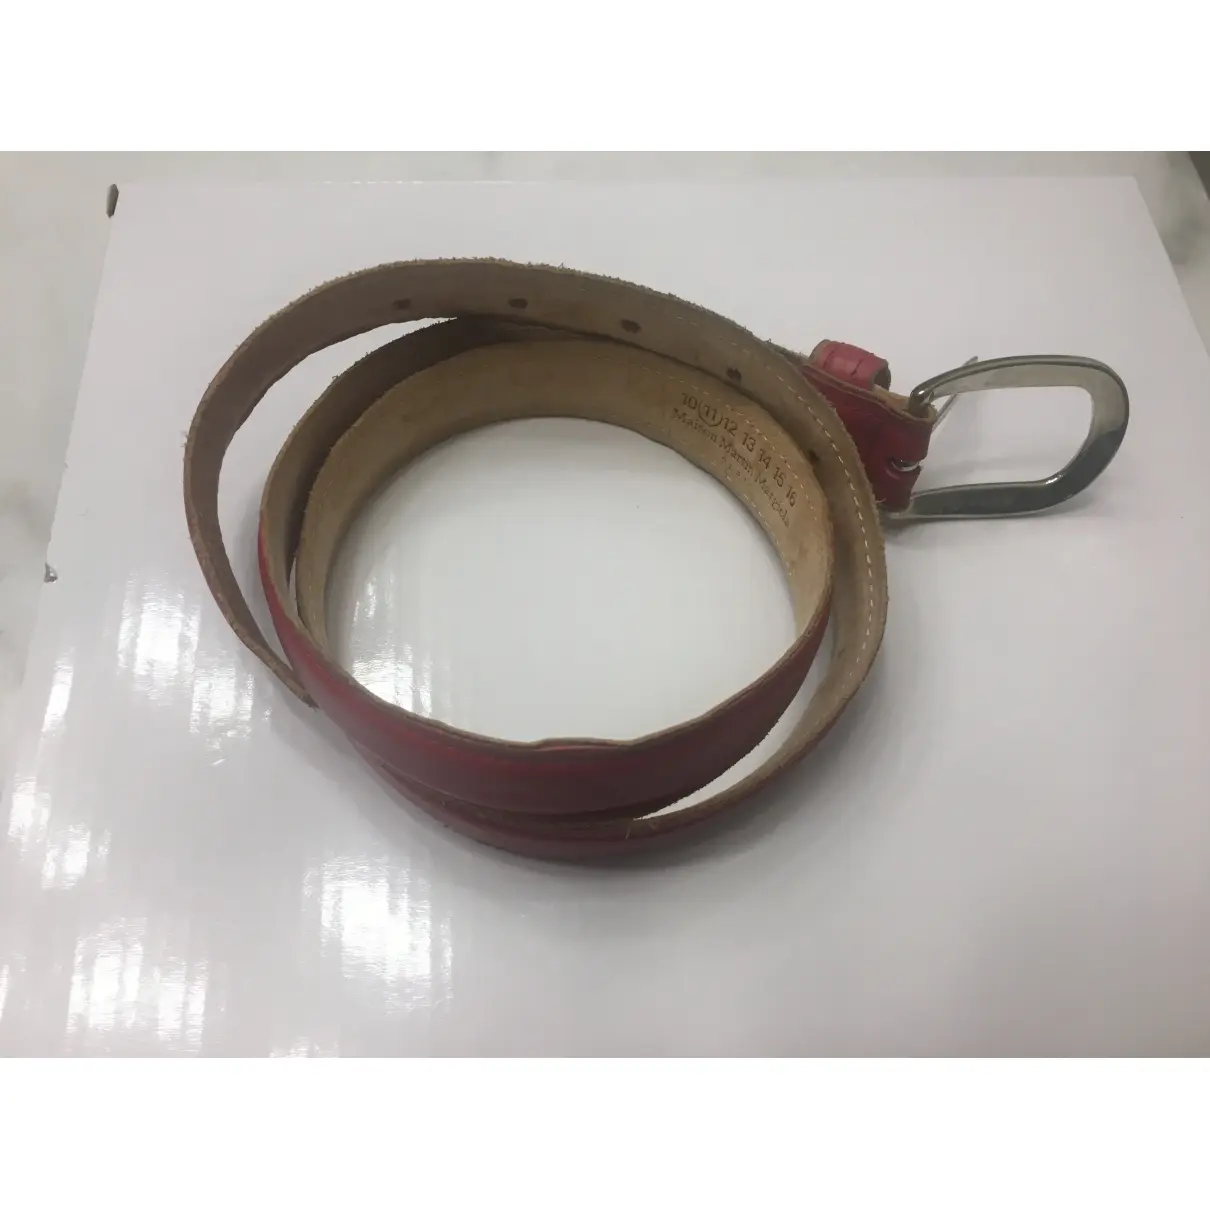 Buy Maison Martin Margiela Leather belt online